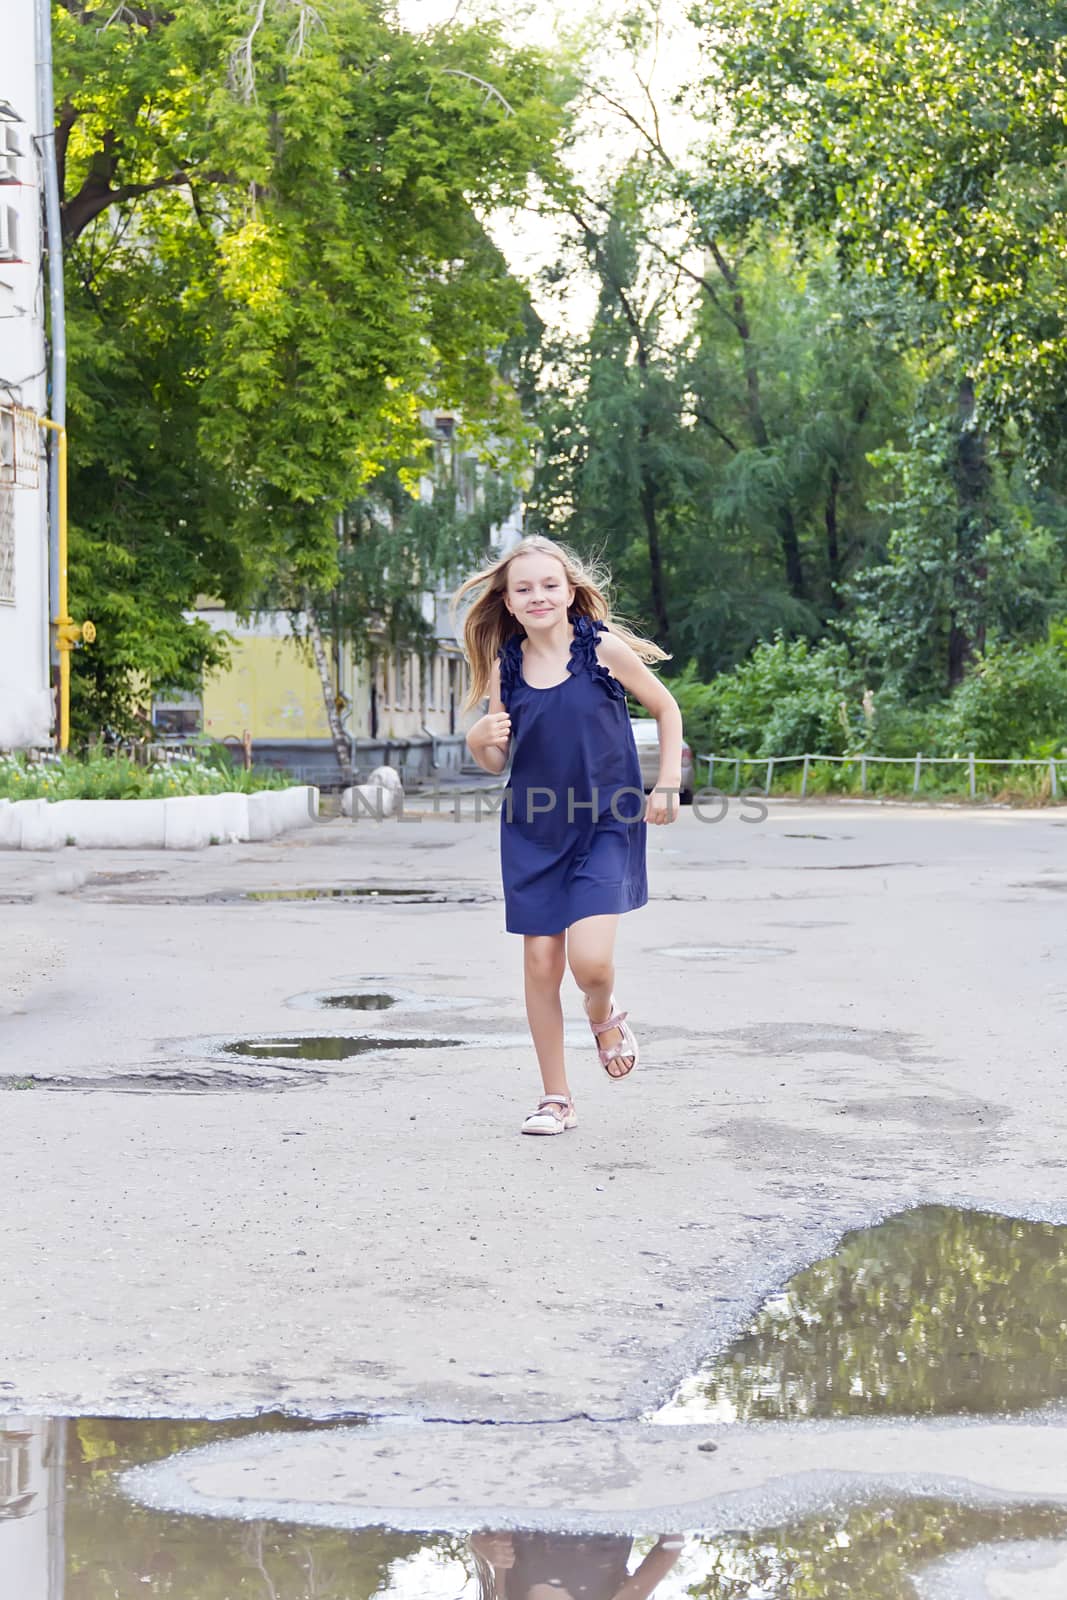 Cute running European girl with disheveled hair